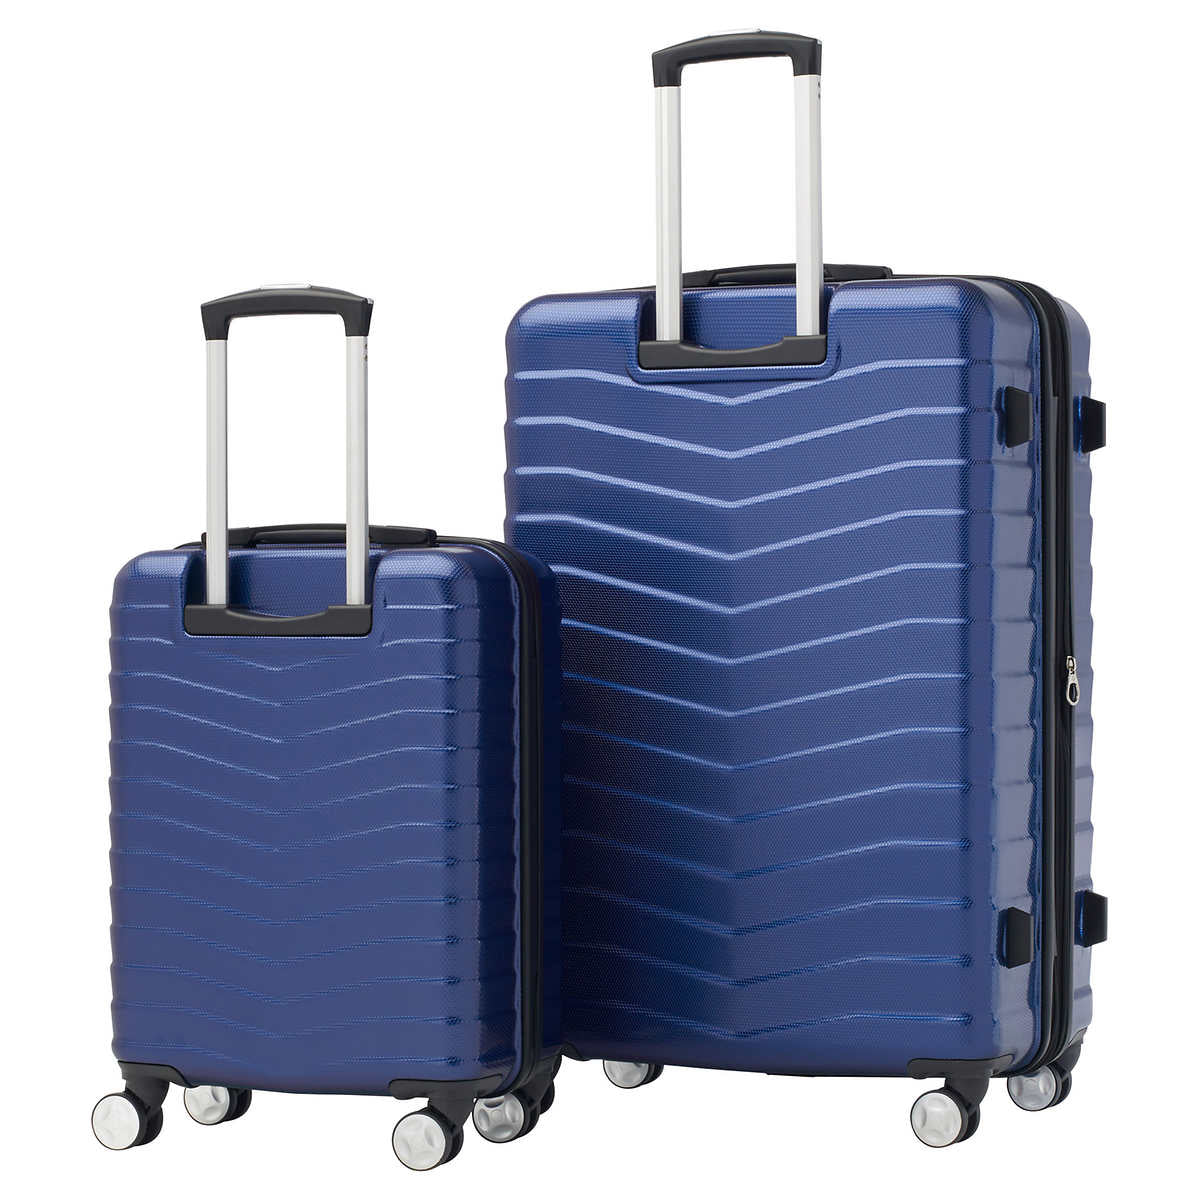 Samsonite Movelite NXT 2-piece Hardside Luggage Set